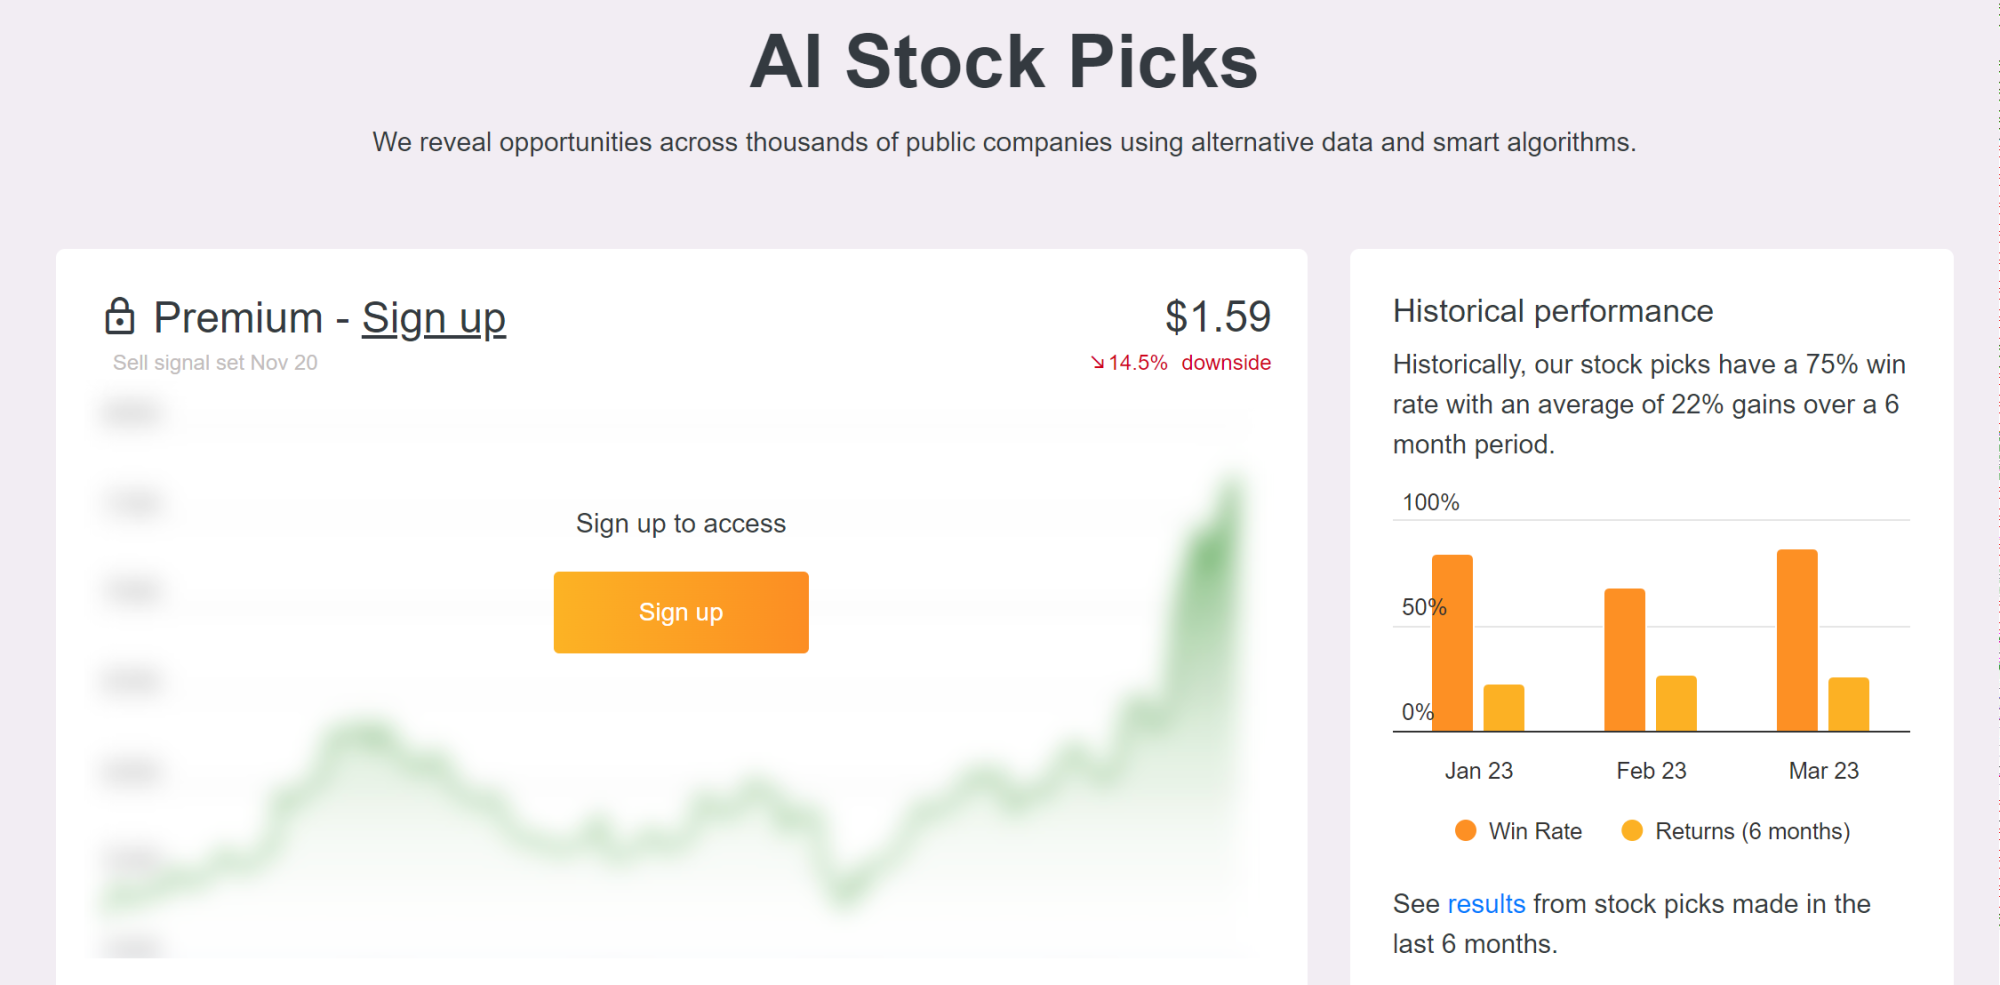 AltIndex AI Stock Picks